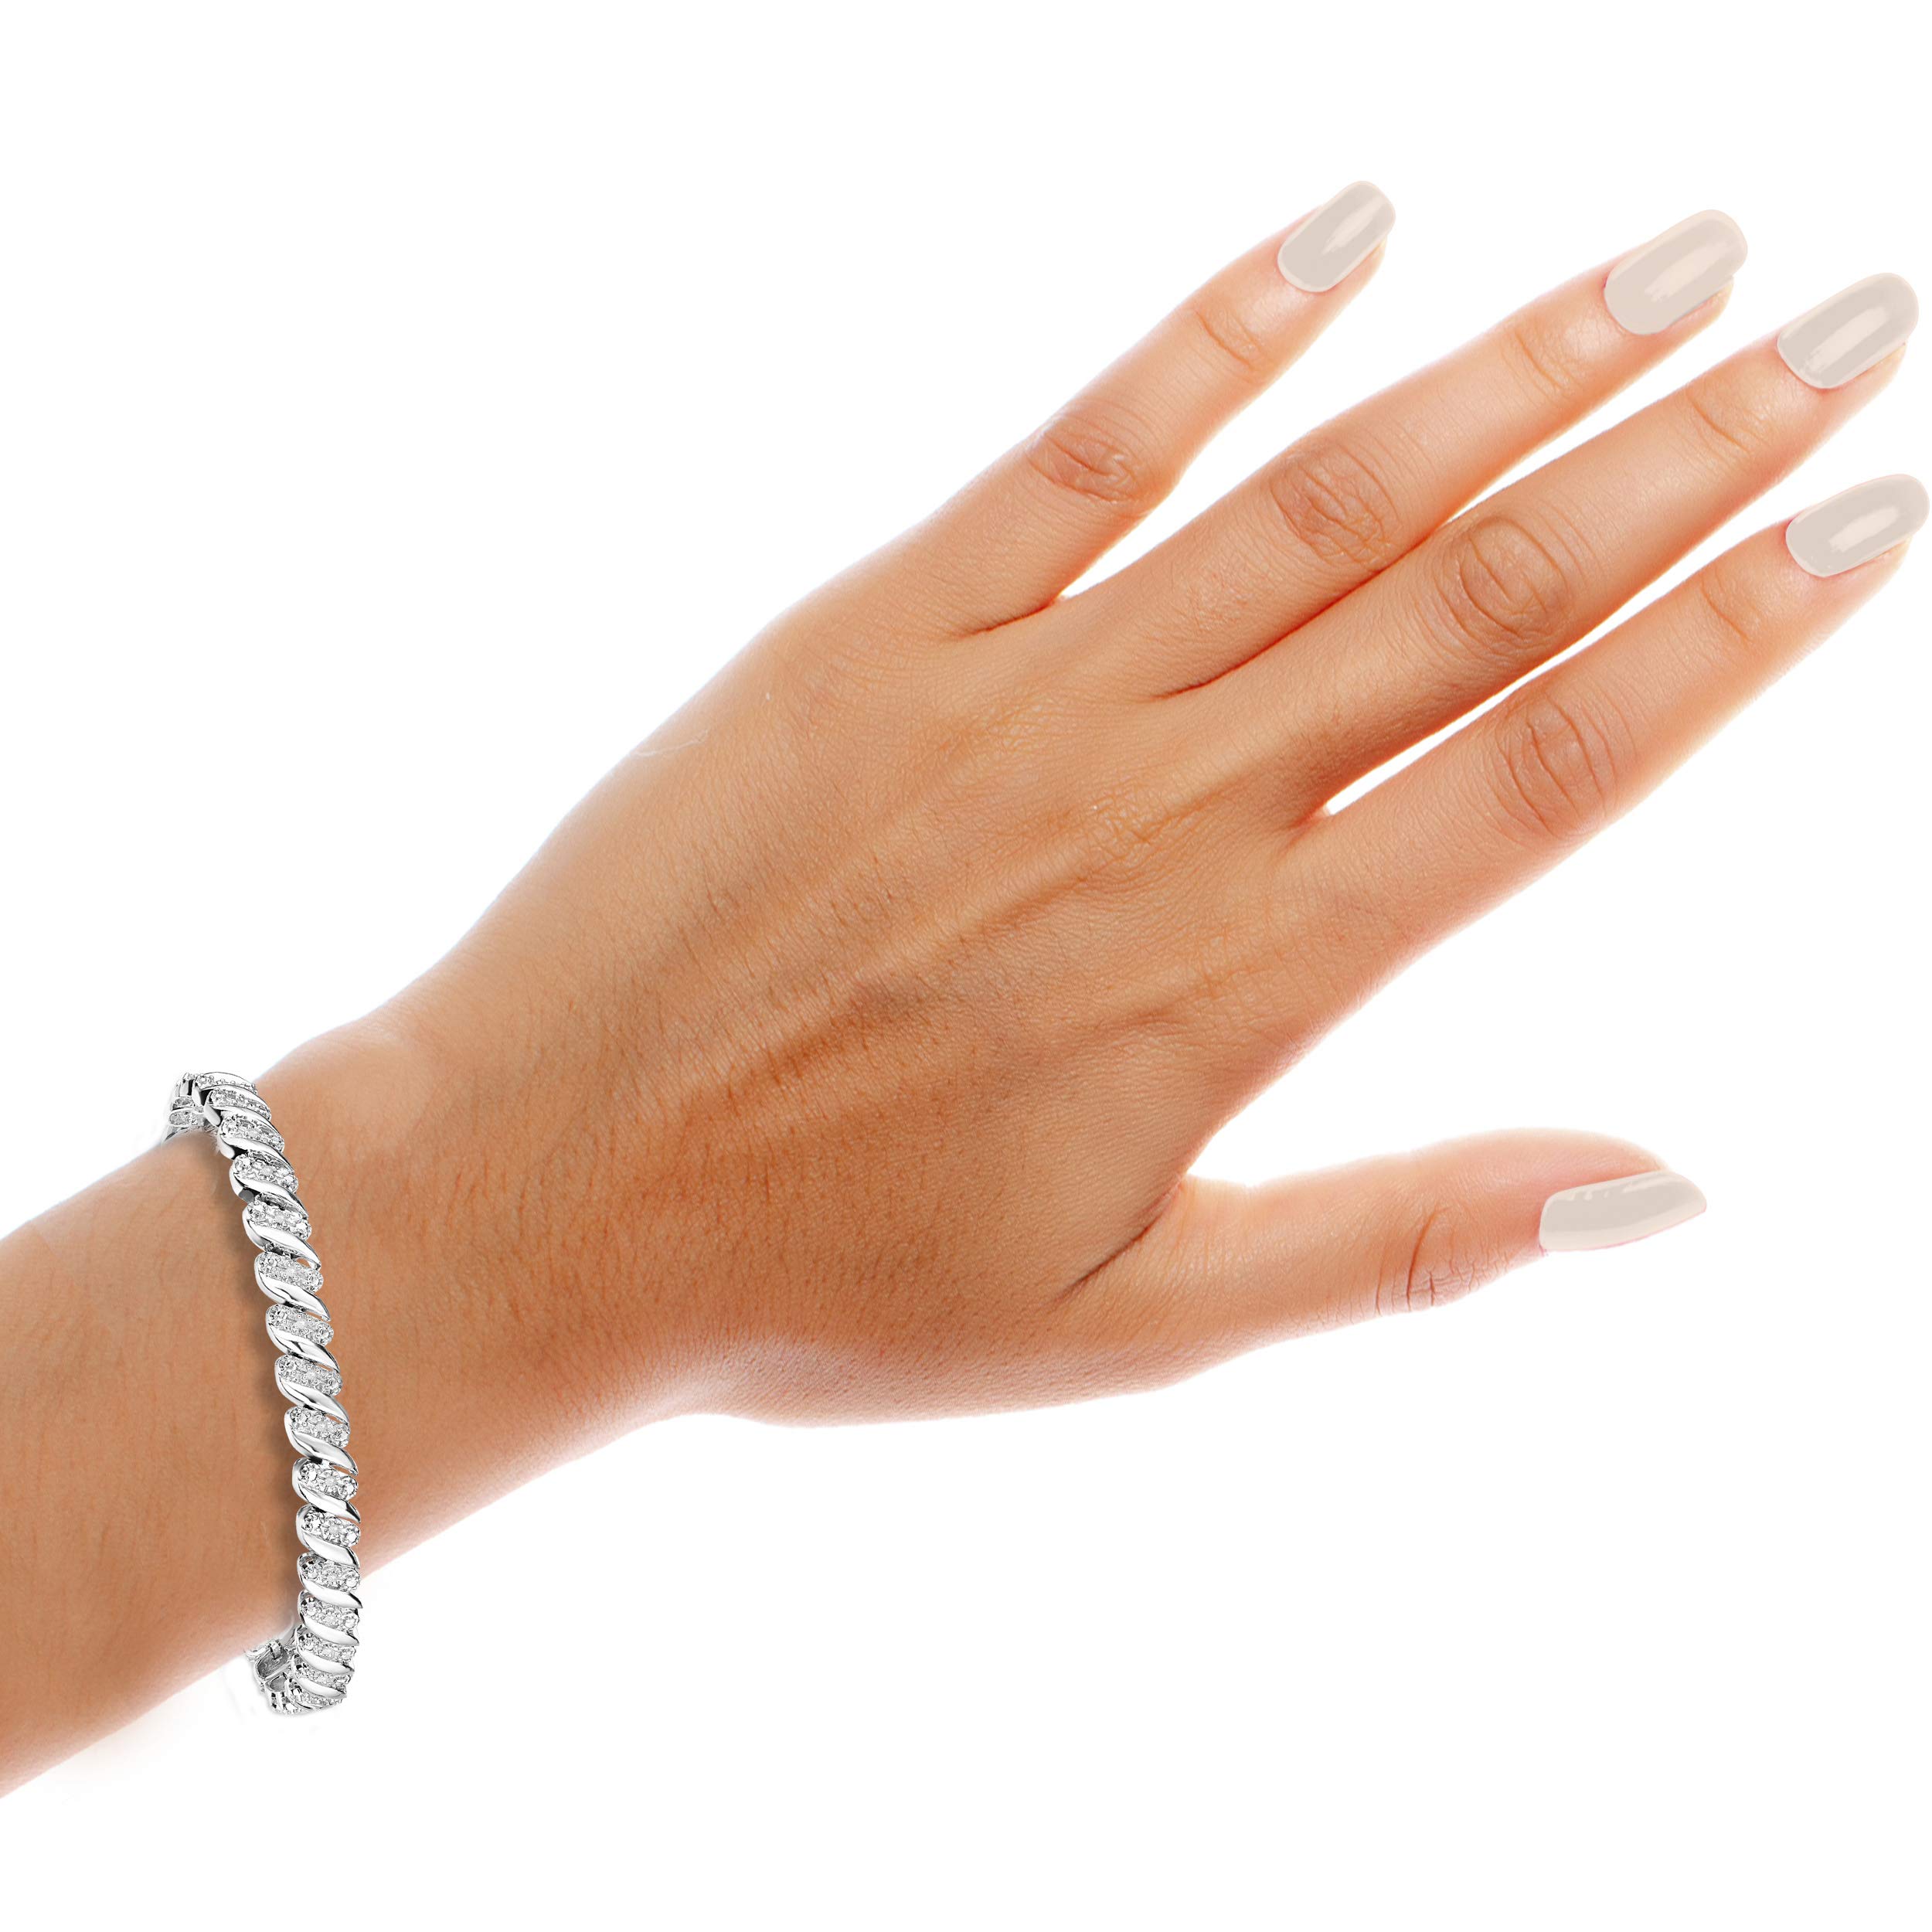 NATALIA DRAKE 1/4 Cttw Wave Link Diamond Tennis Bracelet for Women in 925 Sterling Silver Color I-J/Clarity I2-I3